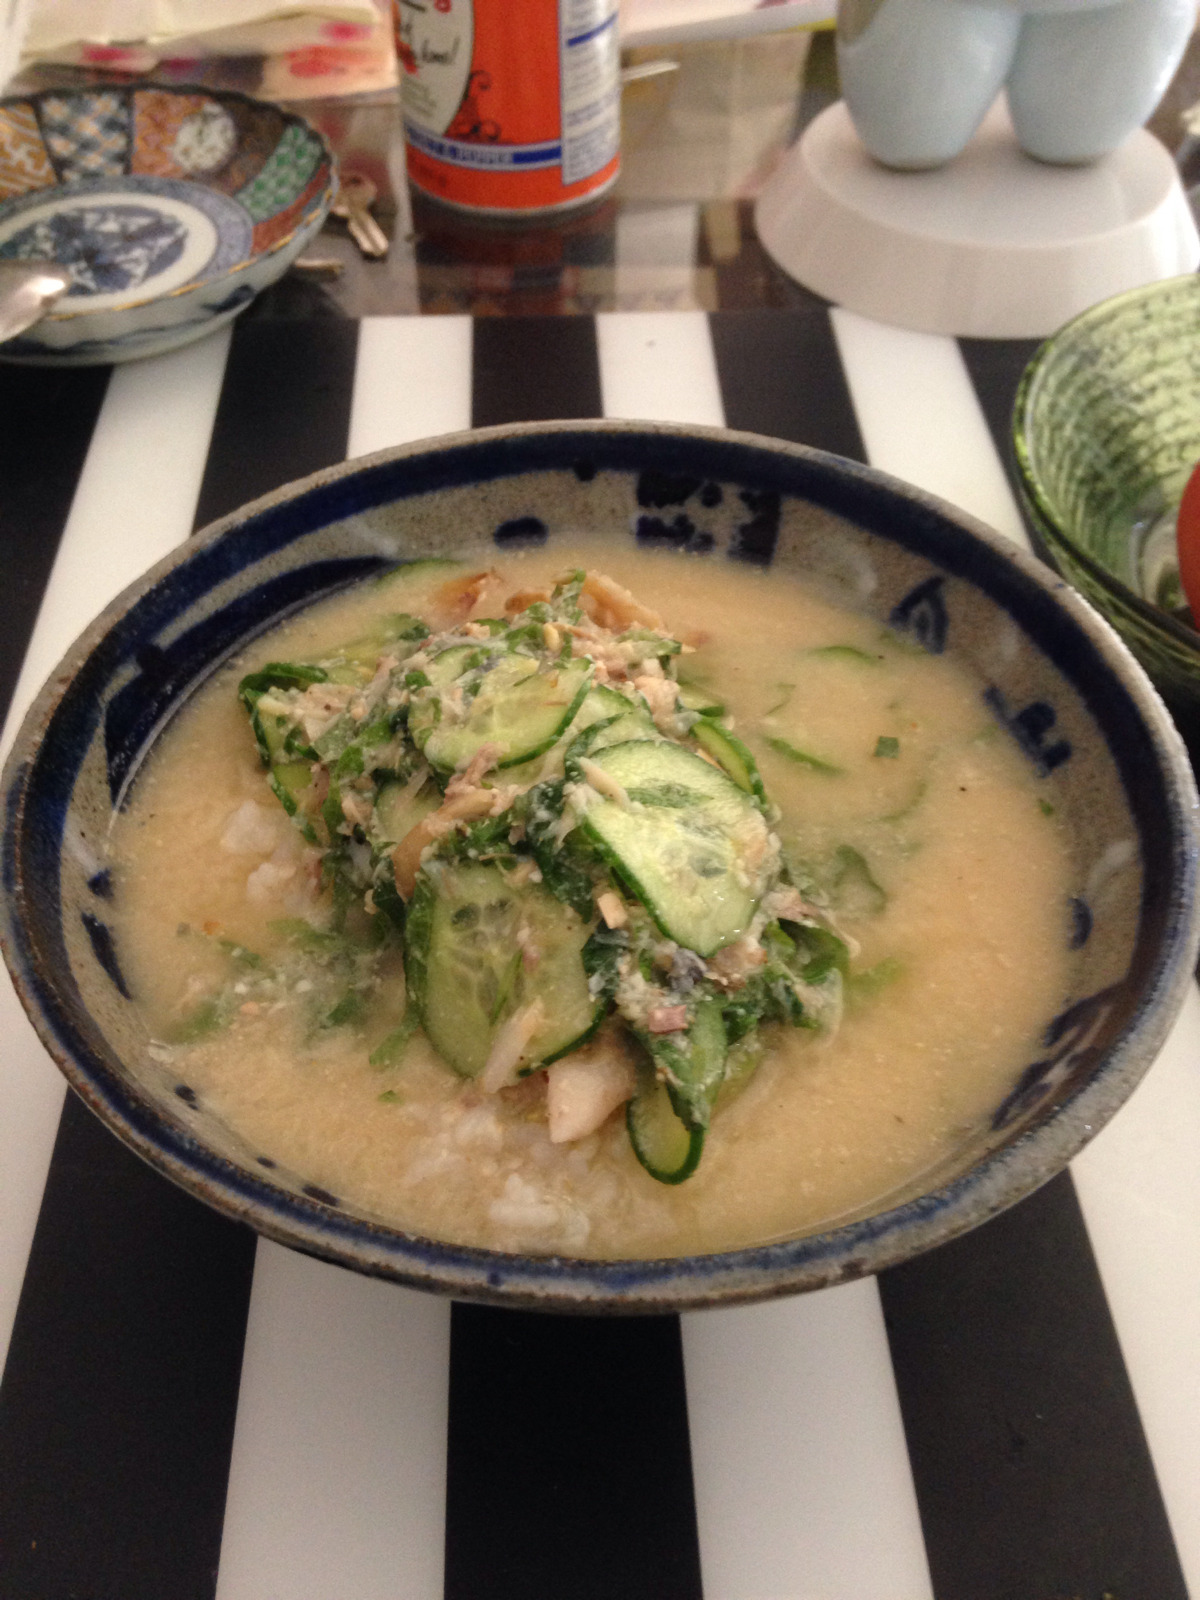 Made a dish called “Hiyashijiru” today because I read about it in the manga “Shinya